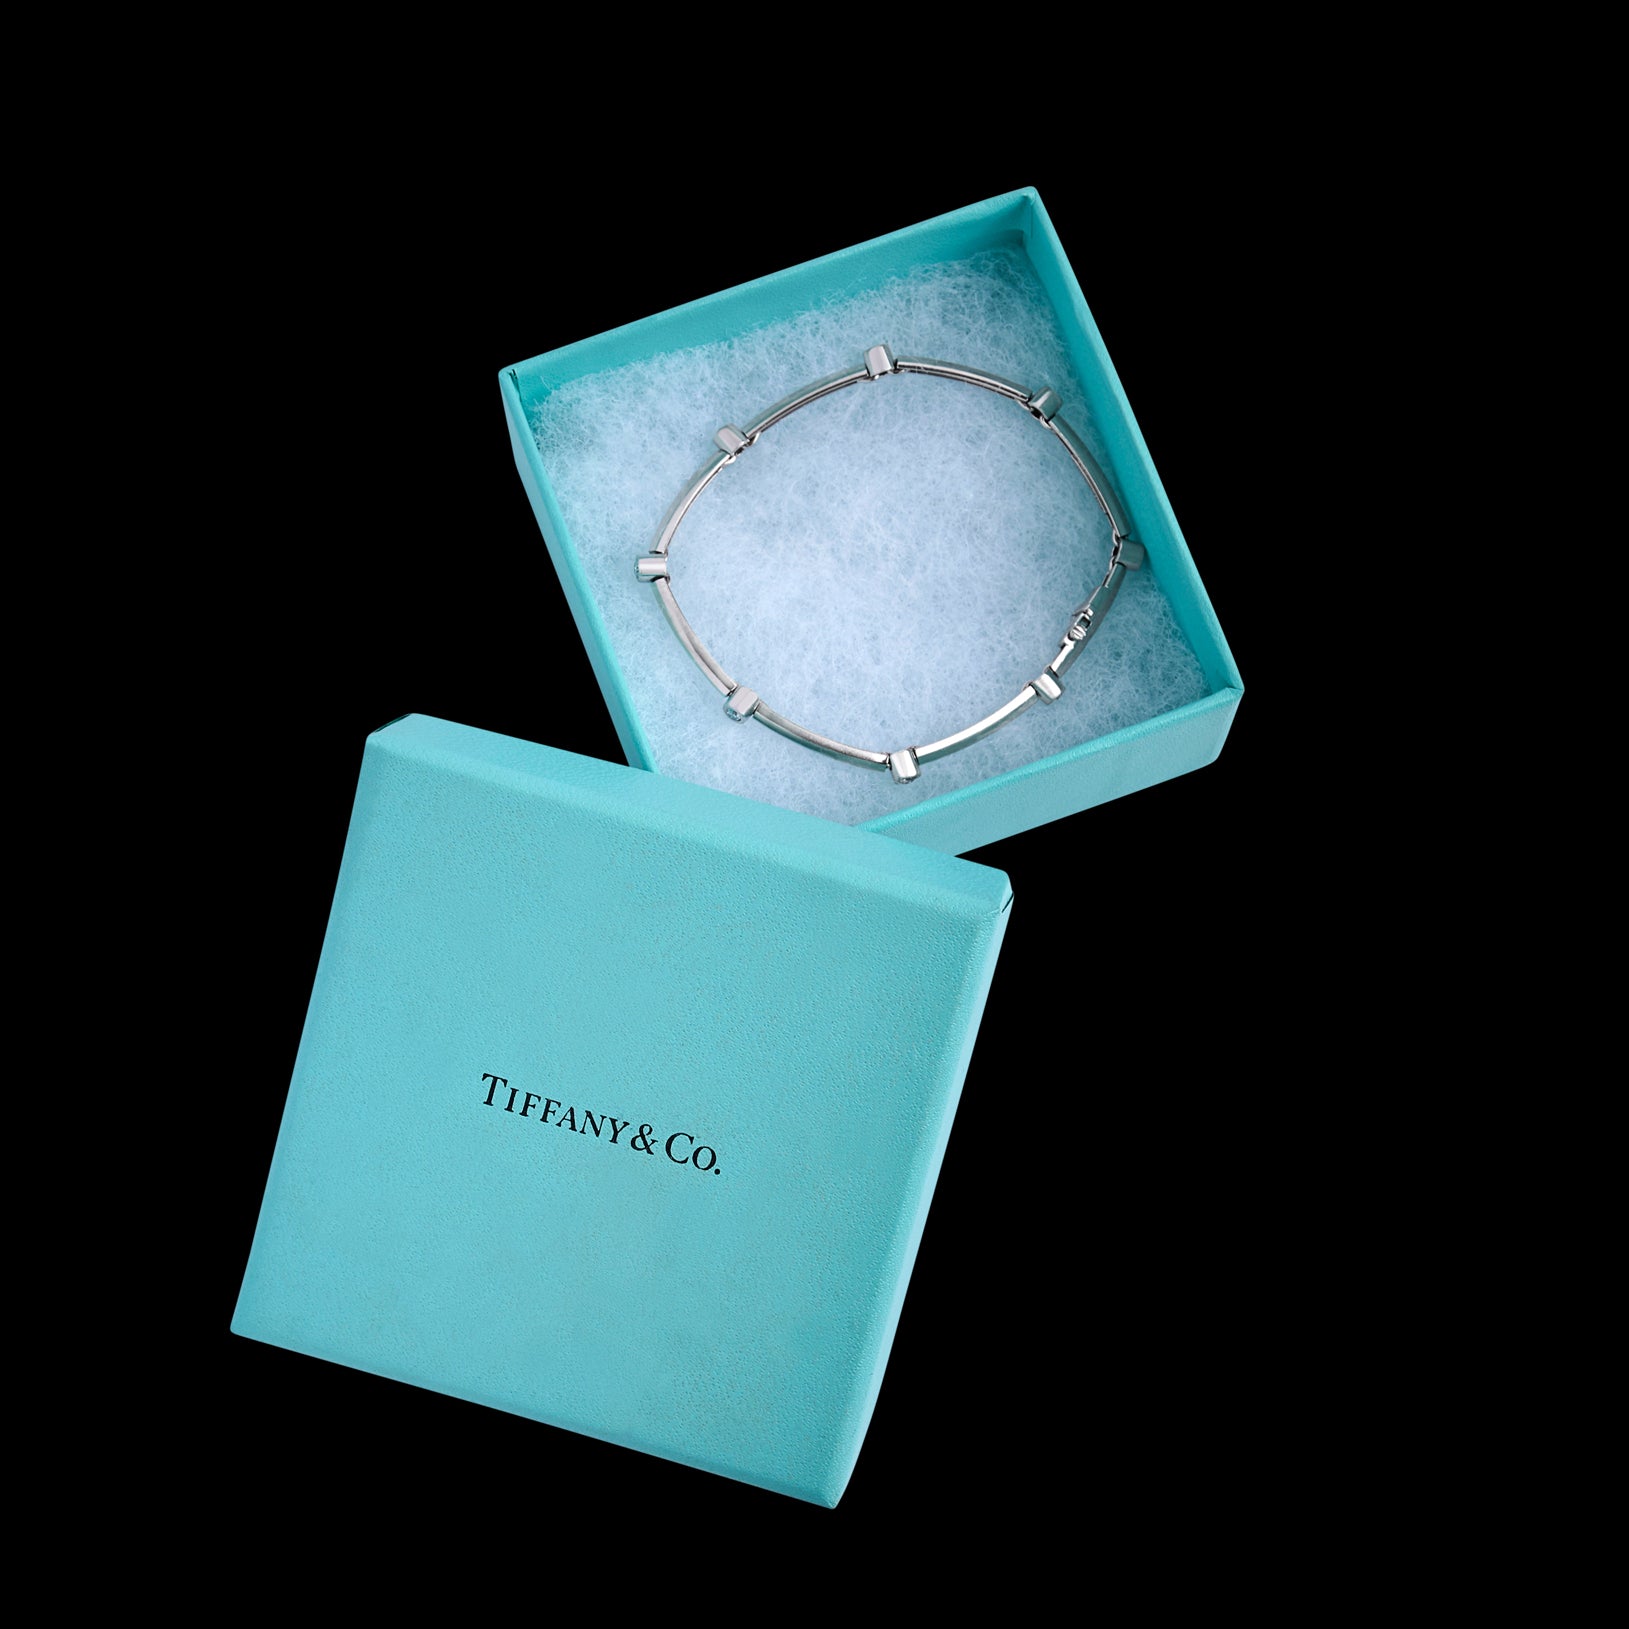 Tiffany & Co. Diamond Platinum Bracelet